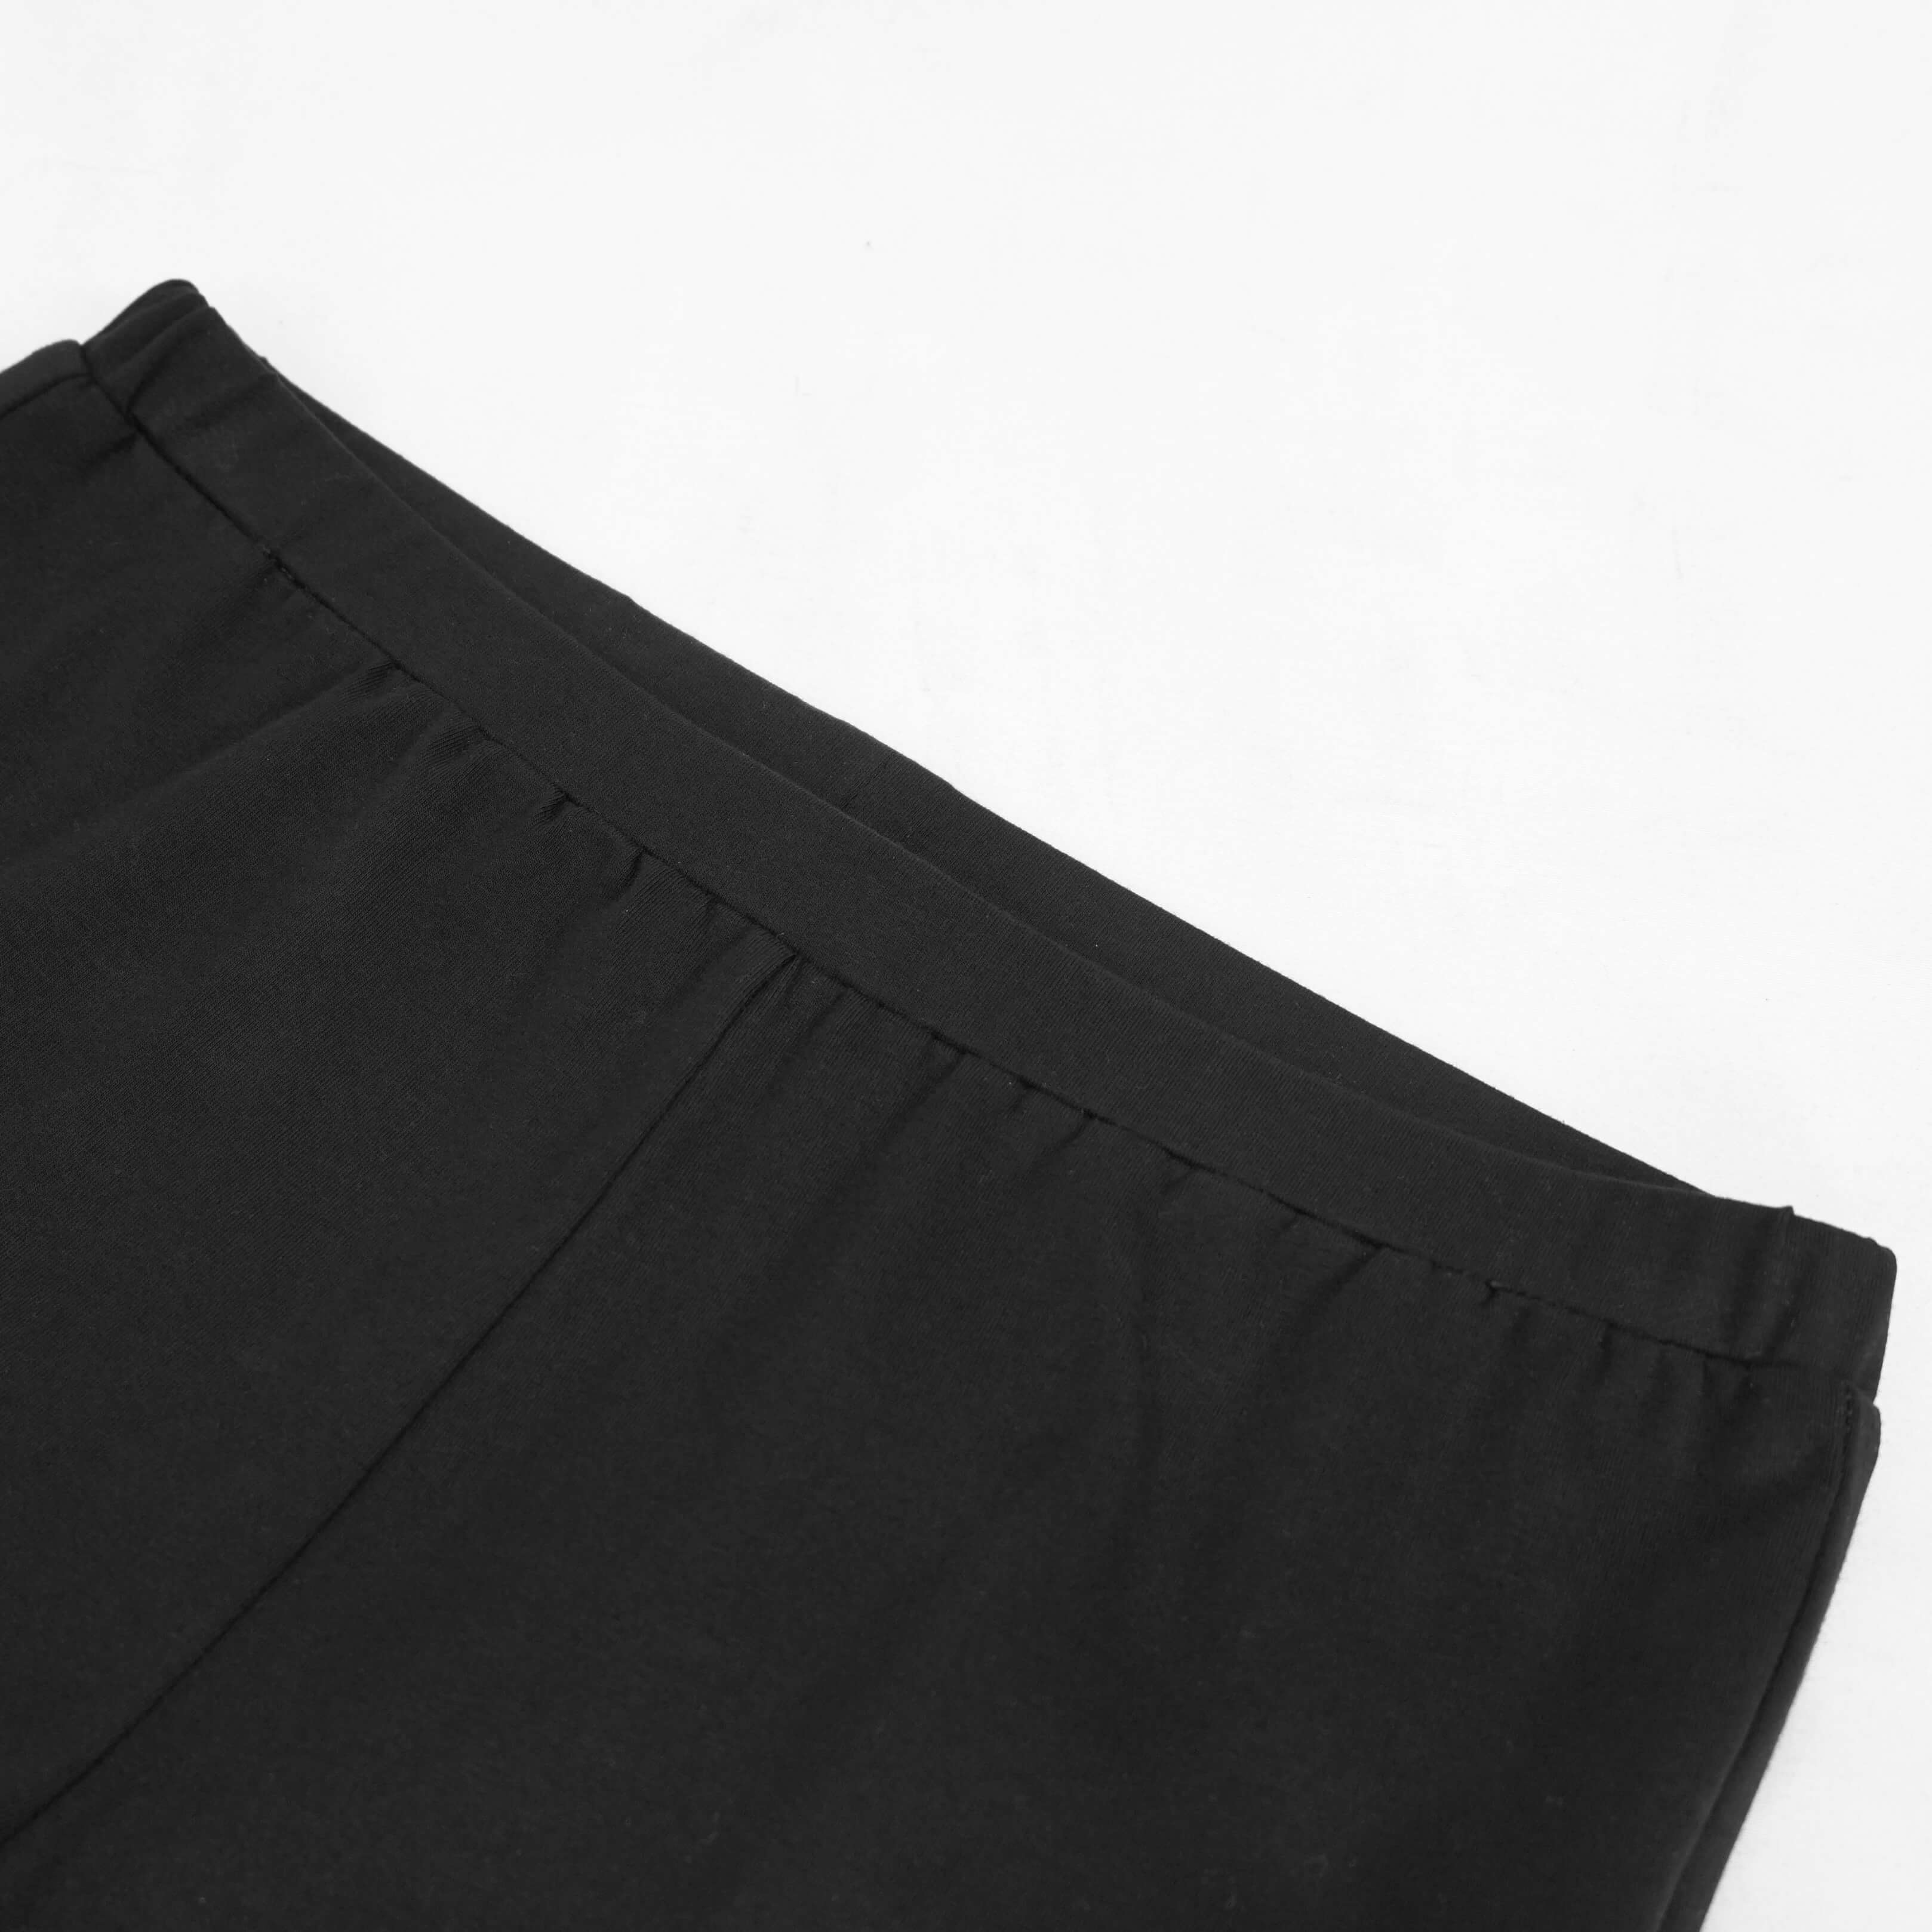 Women's Black Leggings with White Baphomet Print / Stylish Ladies Soft Stretchy Cotton Leggings - HARD'N'HEAVY